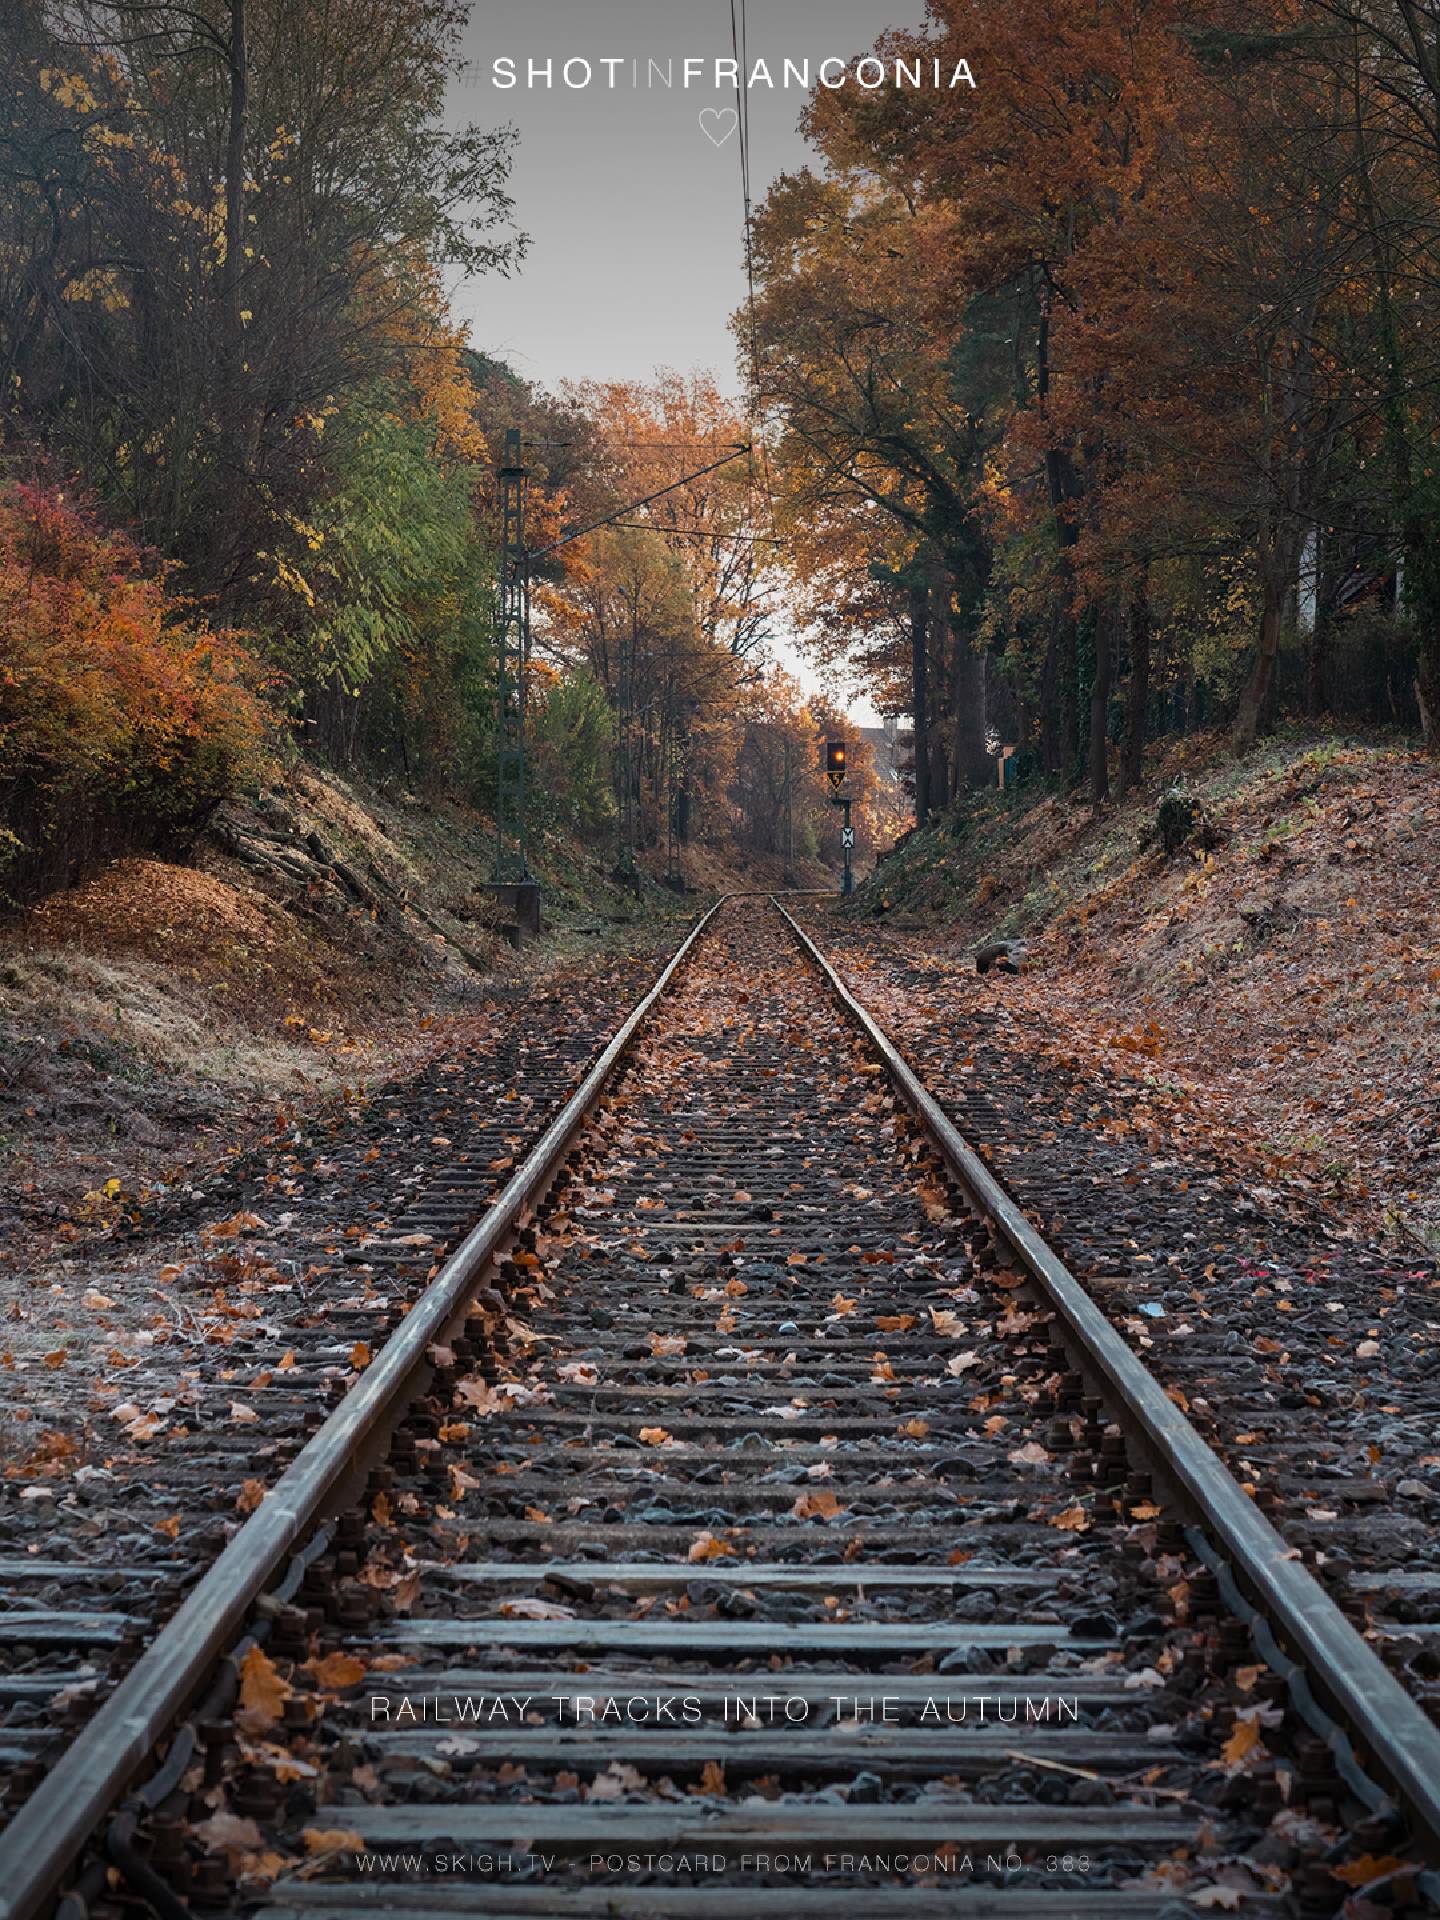 Railway tracks into the autumn